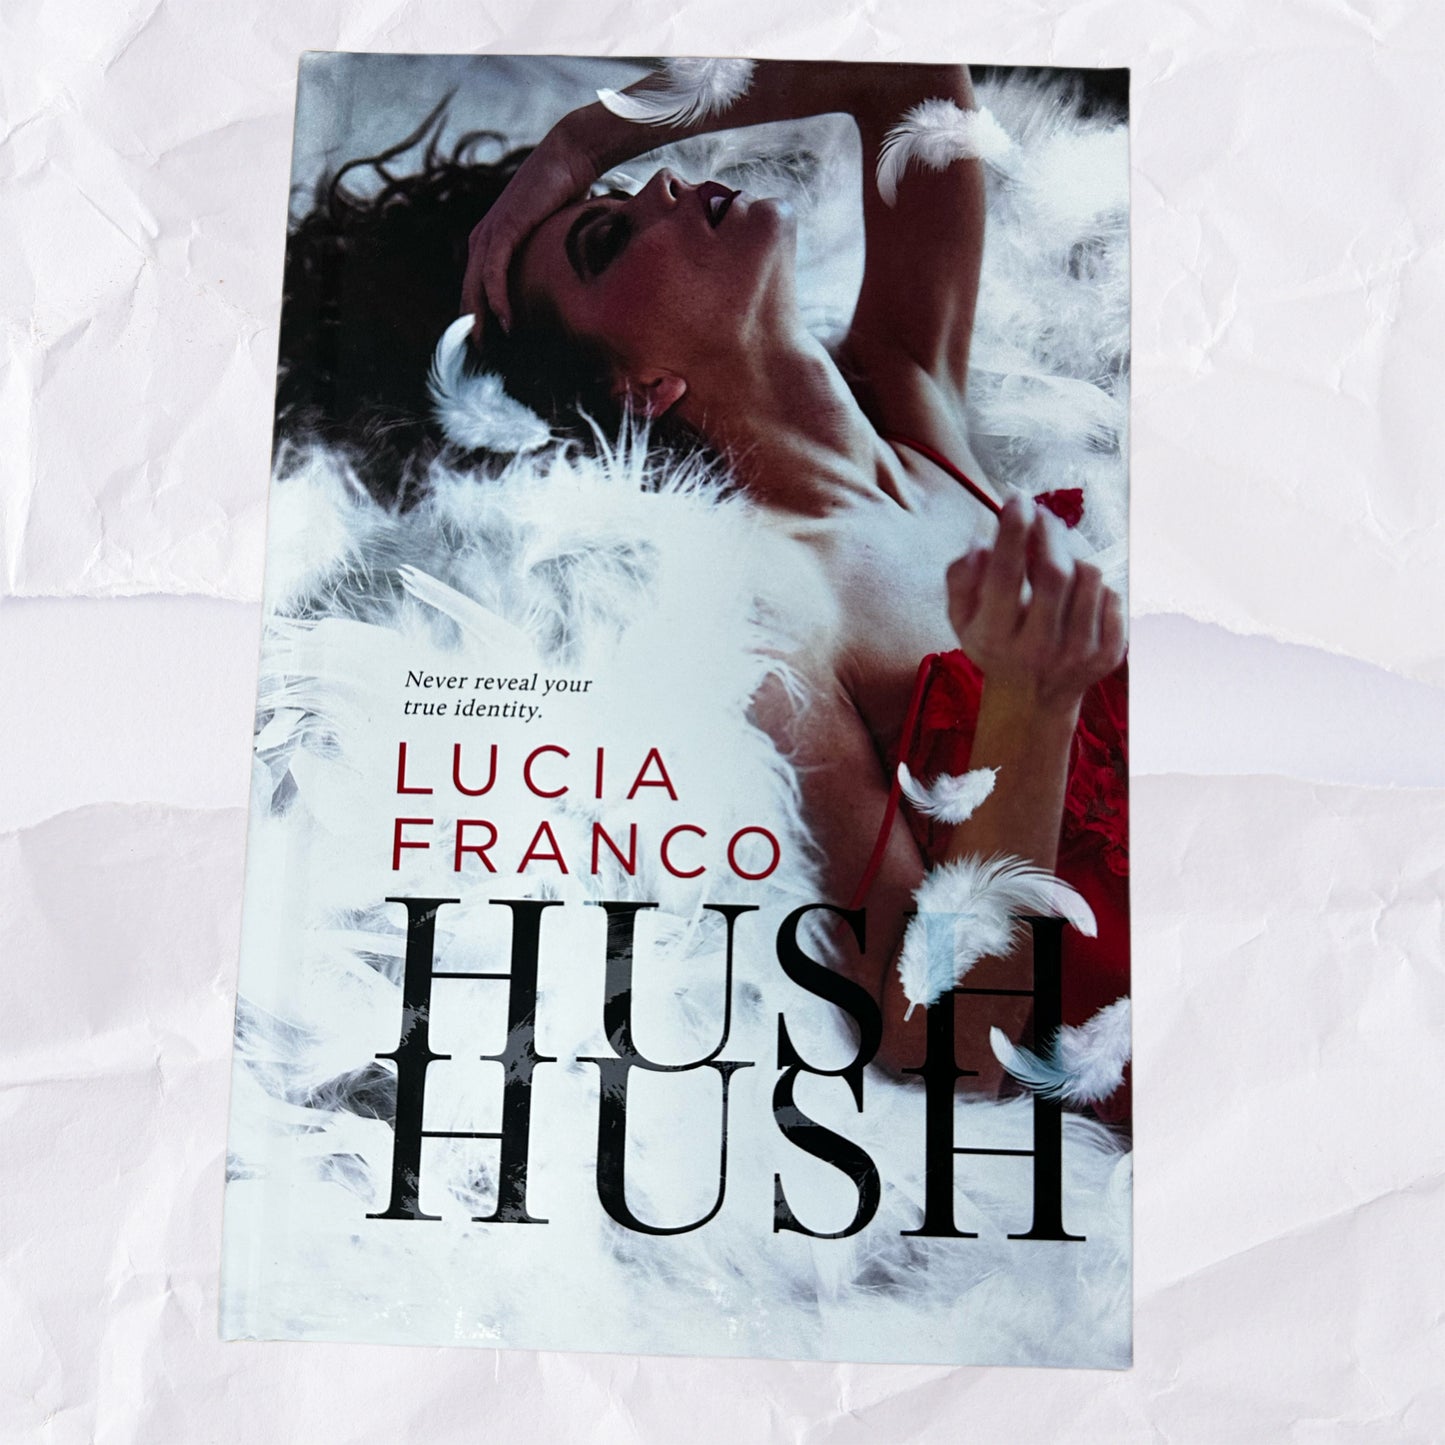 Hush Hush by Lucia Franco - Hardcover